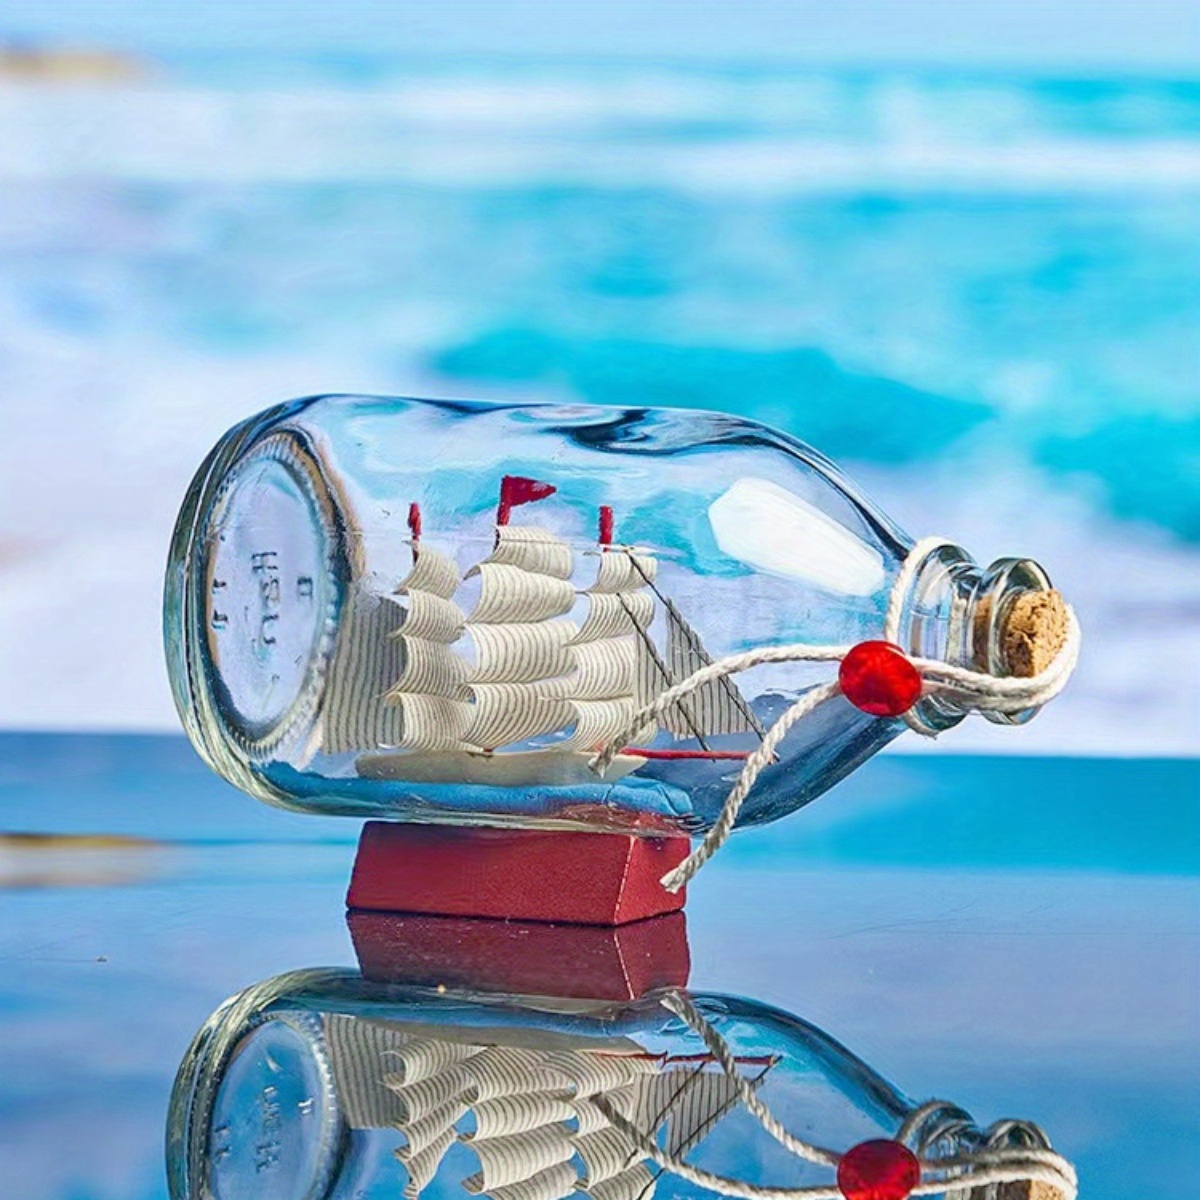 Lamf Drift Bottle Decor, Sailing Boat in Wishing Bottle Glass Cork Bottles, Pirate Ship in A Bottle Kit Handicraft Nautical Home Decorations Gifts